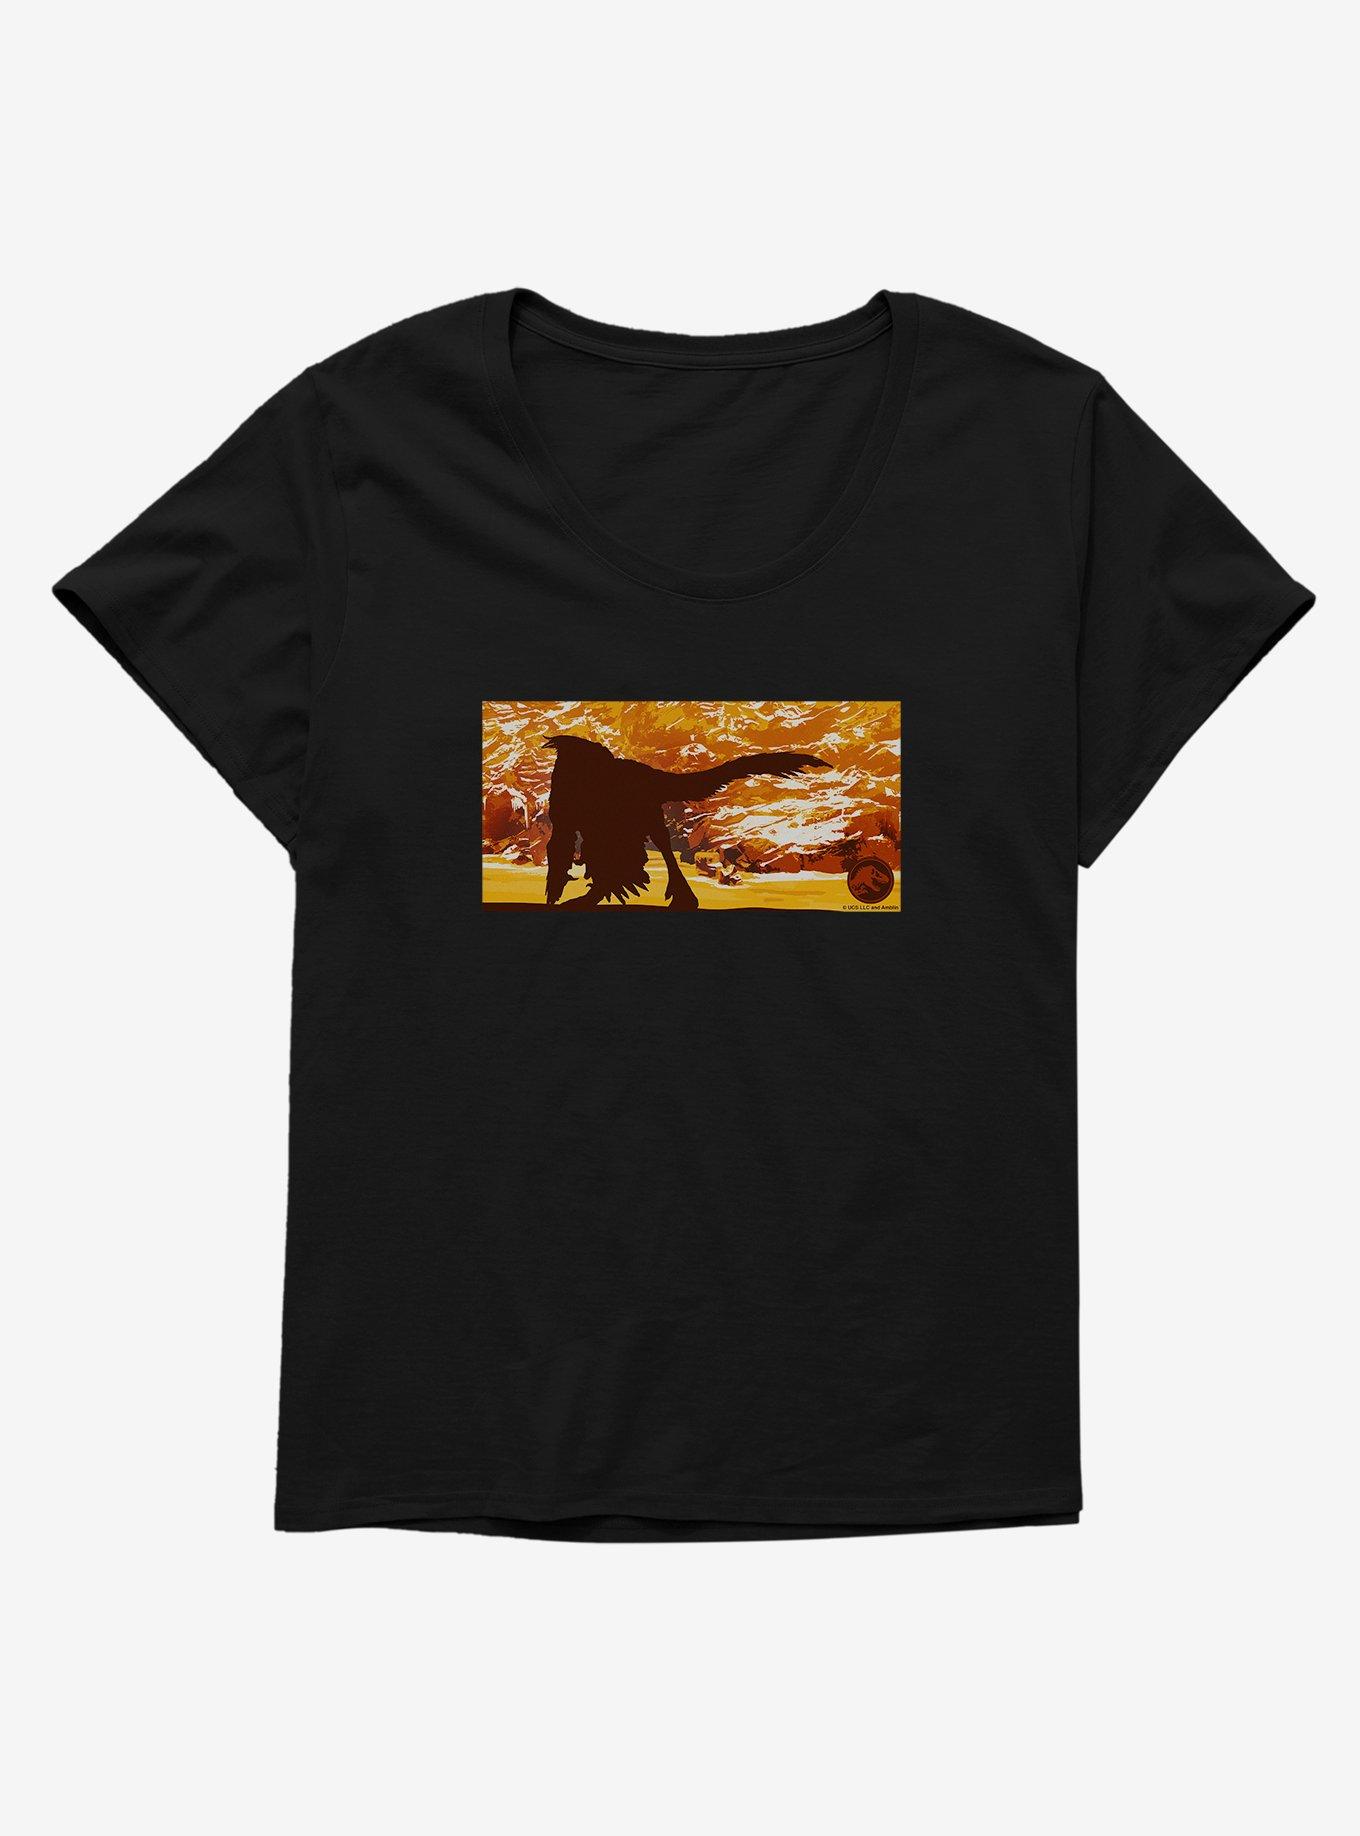 Jurassic World Dominion Pryoraptor Girls T-Shirt Plus